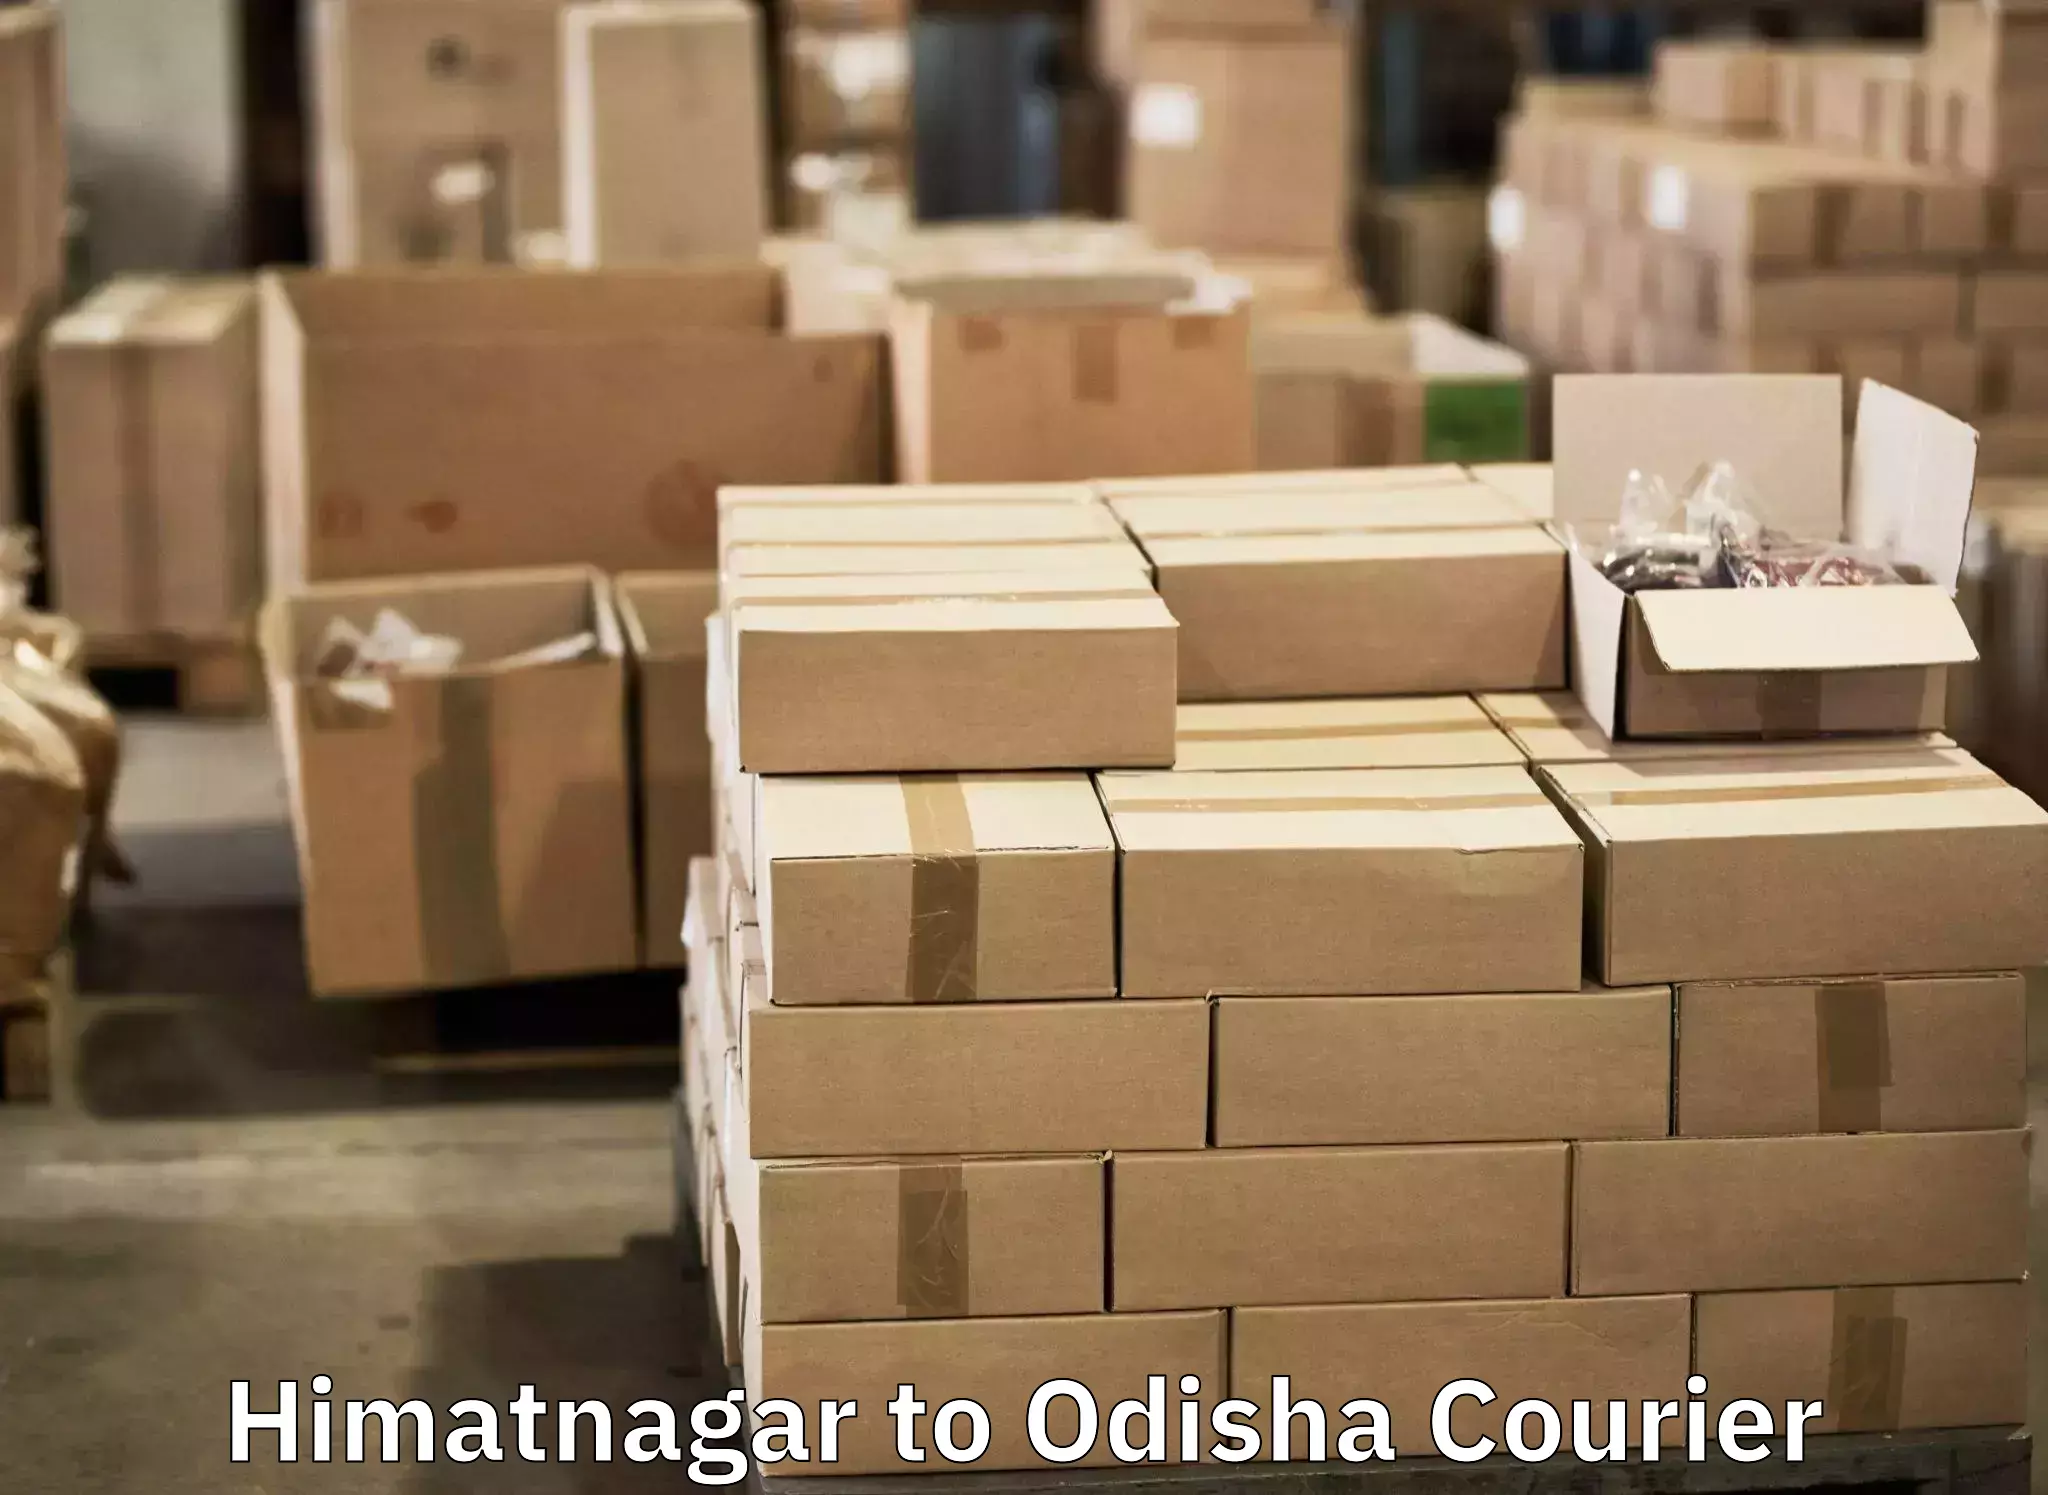 Luggage transport consultancy Himatnagar to Odisha